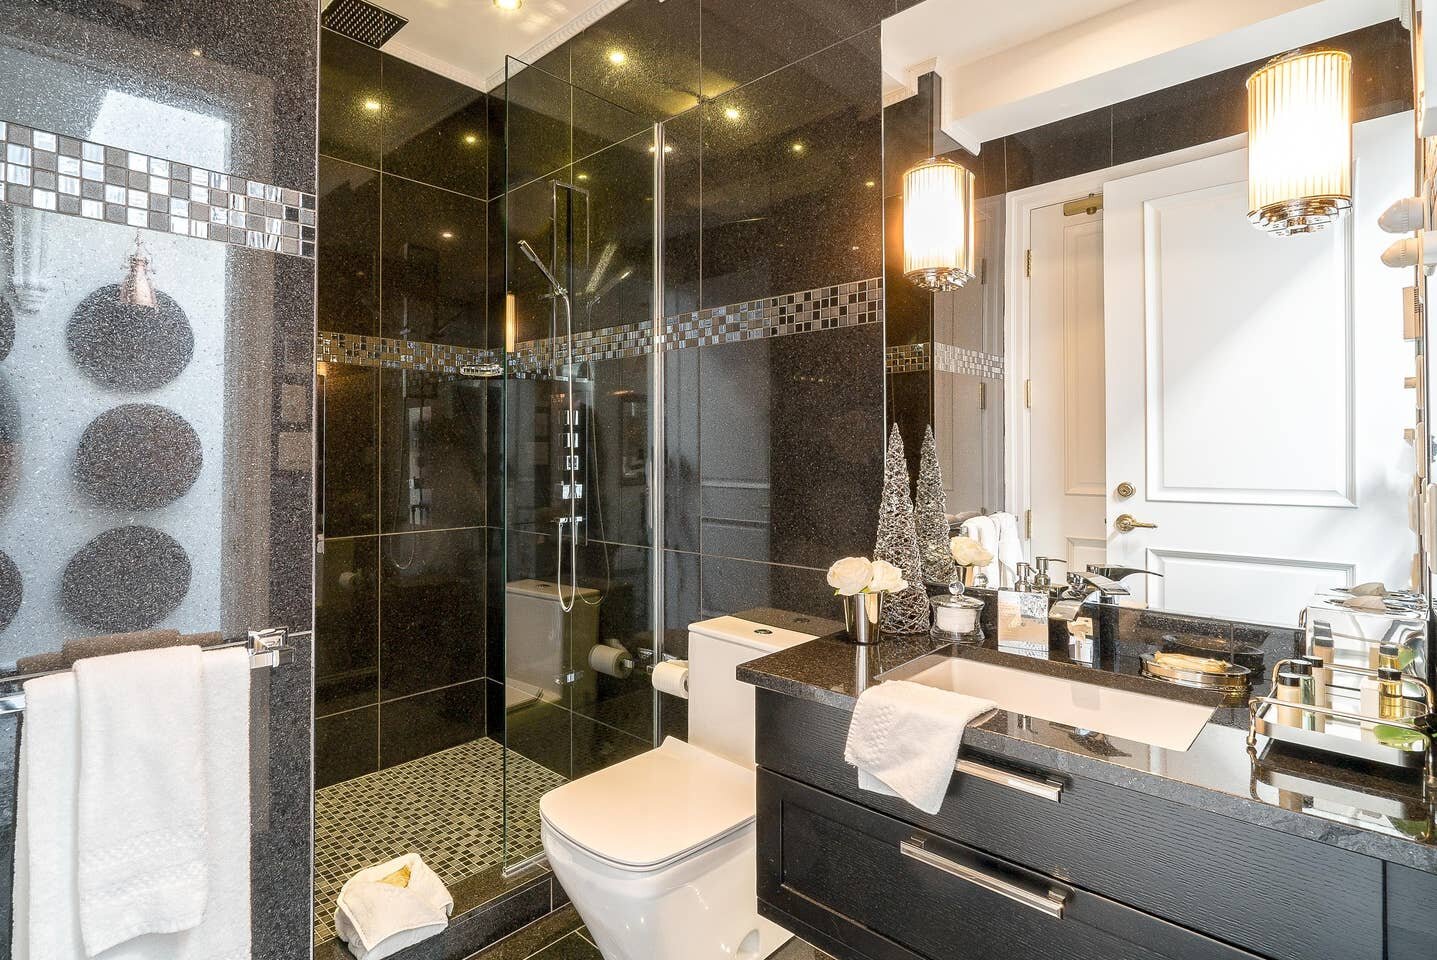 Bathroom 4 of 4 in Royal Suite Airbnb in Québec City